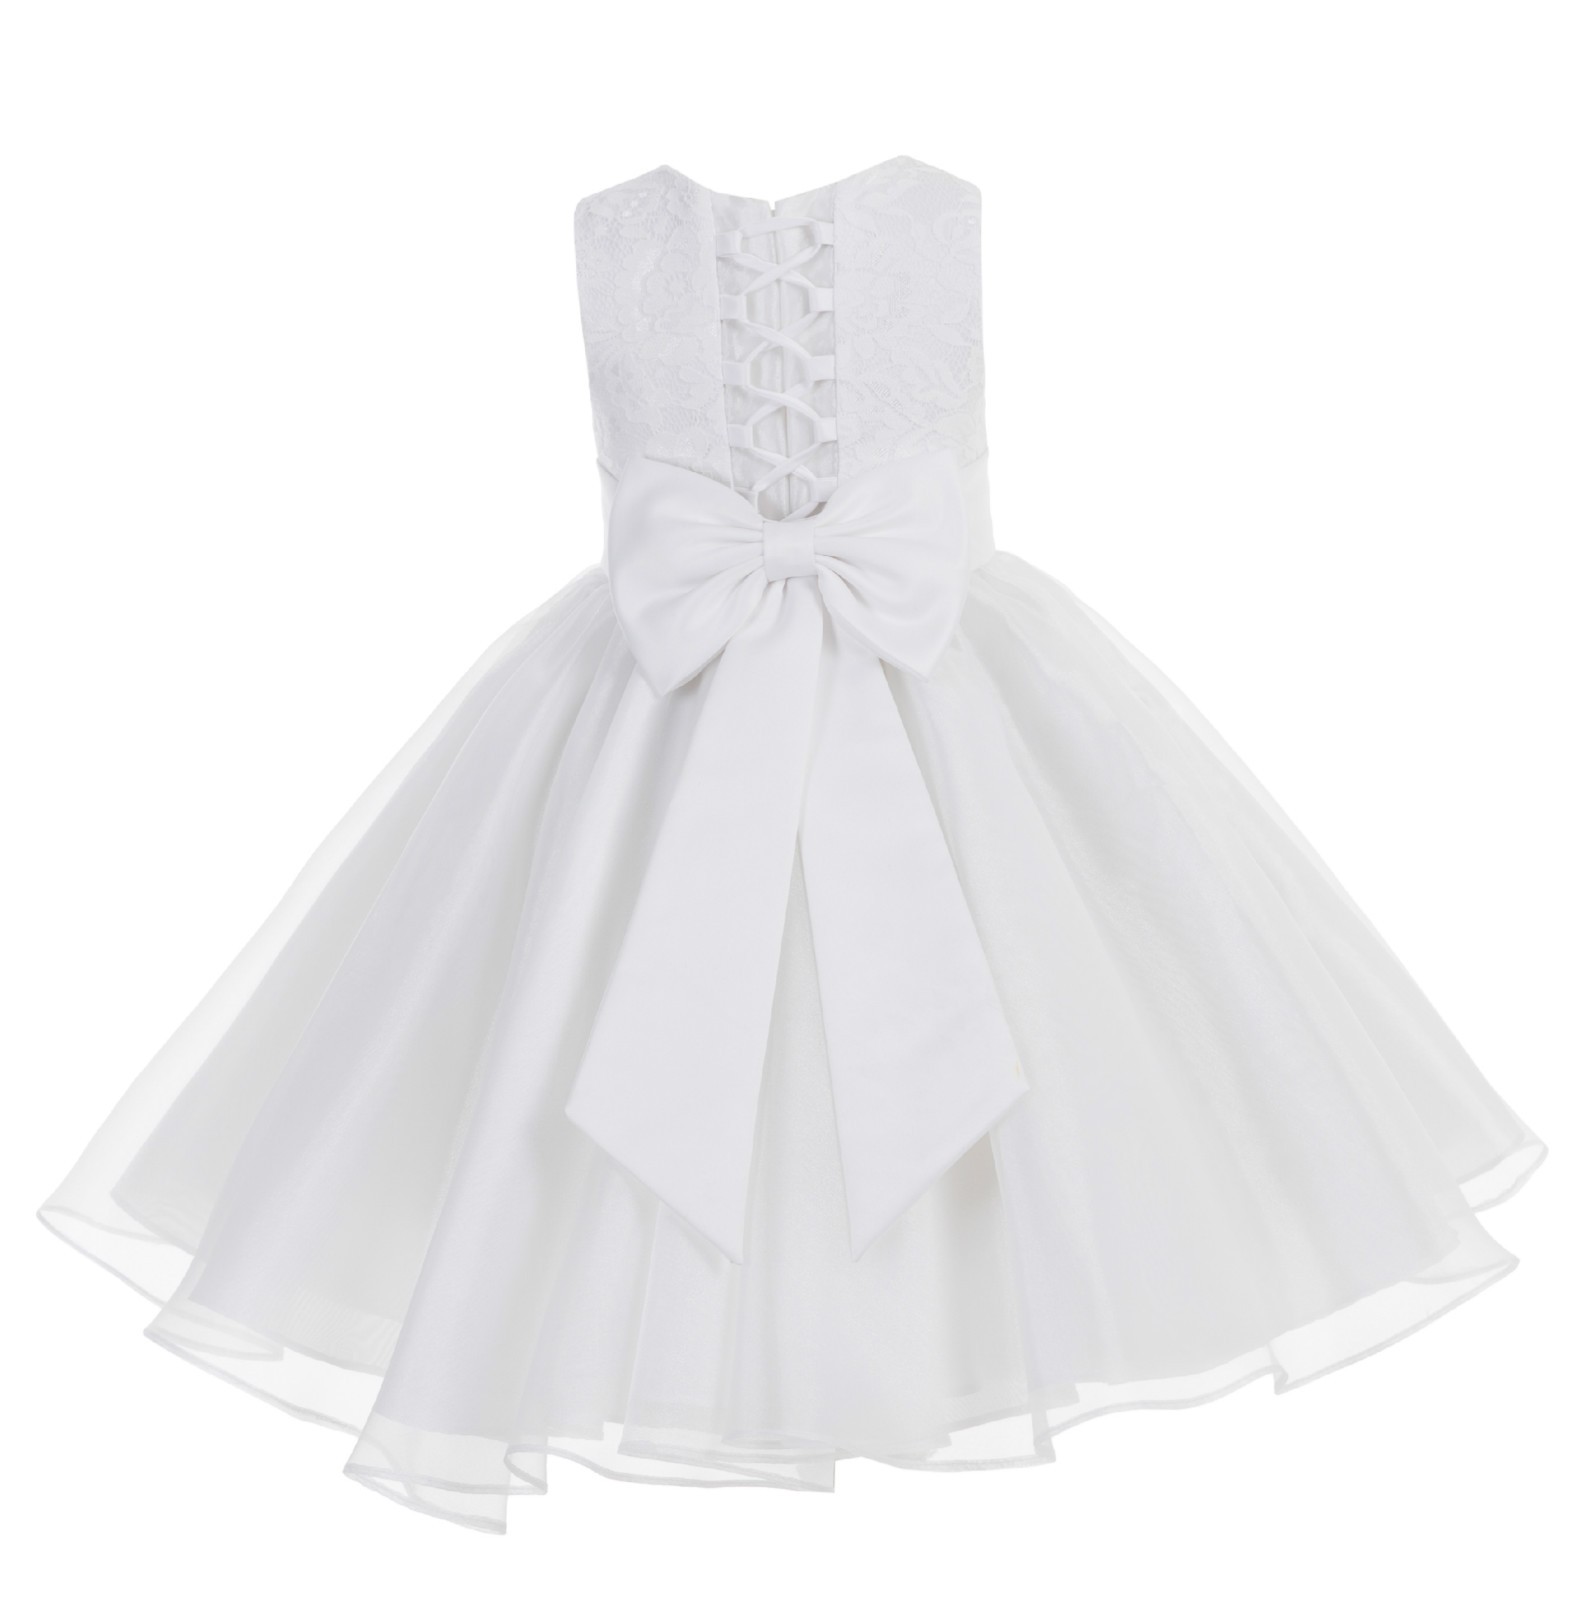 White / White Lace Organza Flower Girl Dress 186T